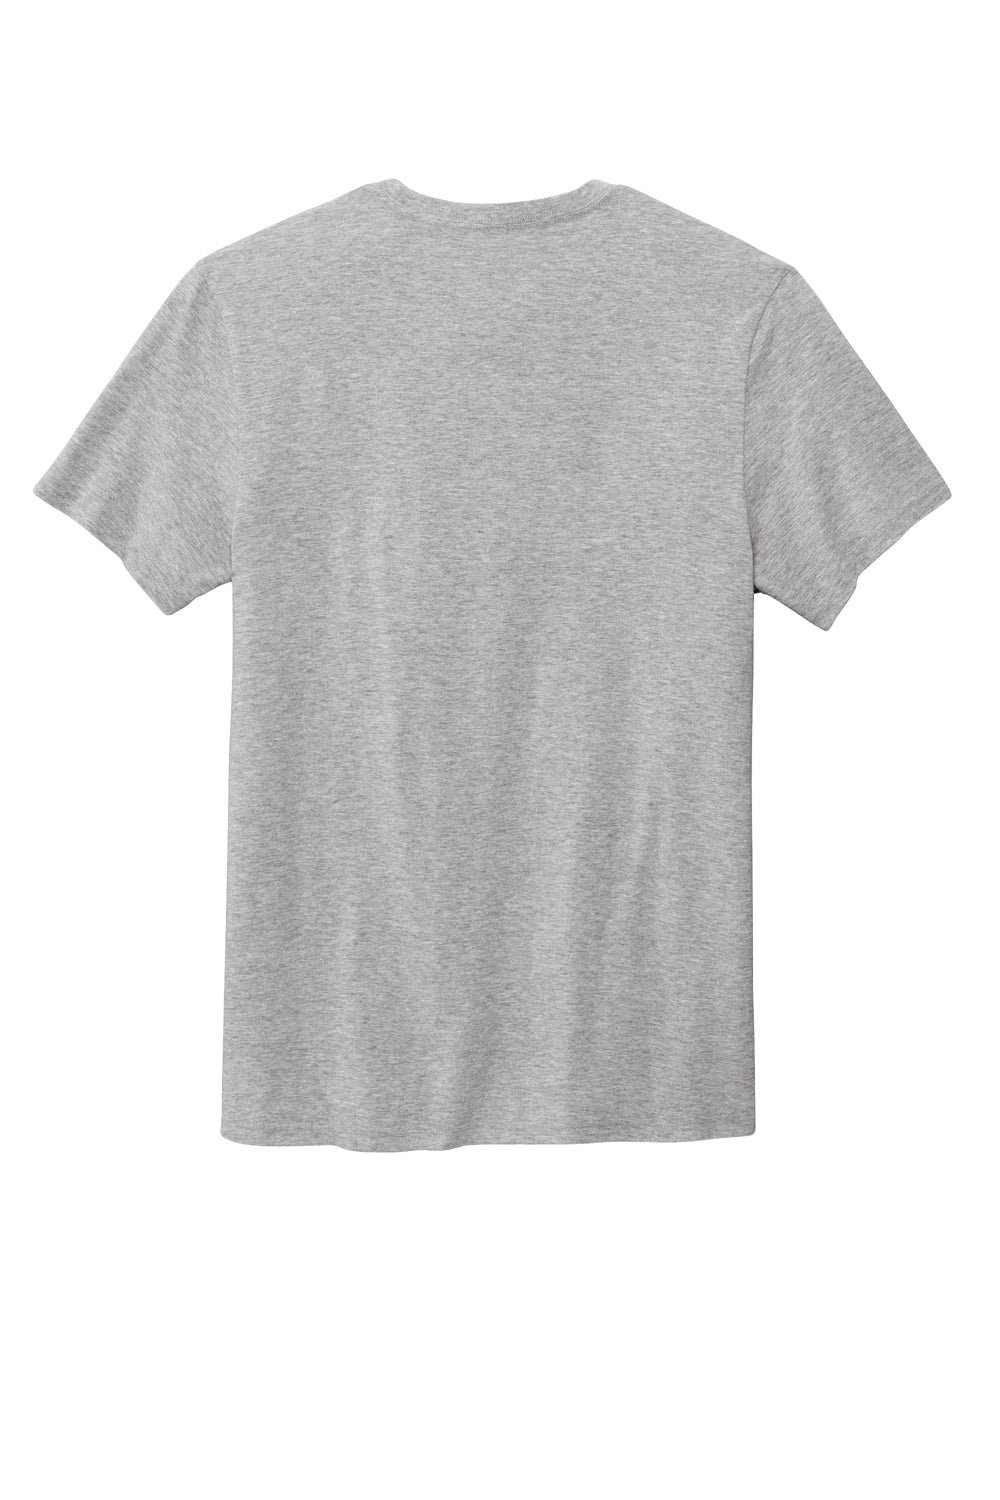 Volunteer Knitwear VL45 Daily Short Sleeve Crewneck T-Shirt Heather Grey Flat Back